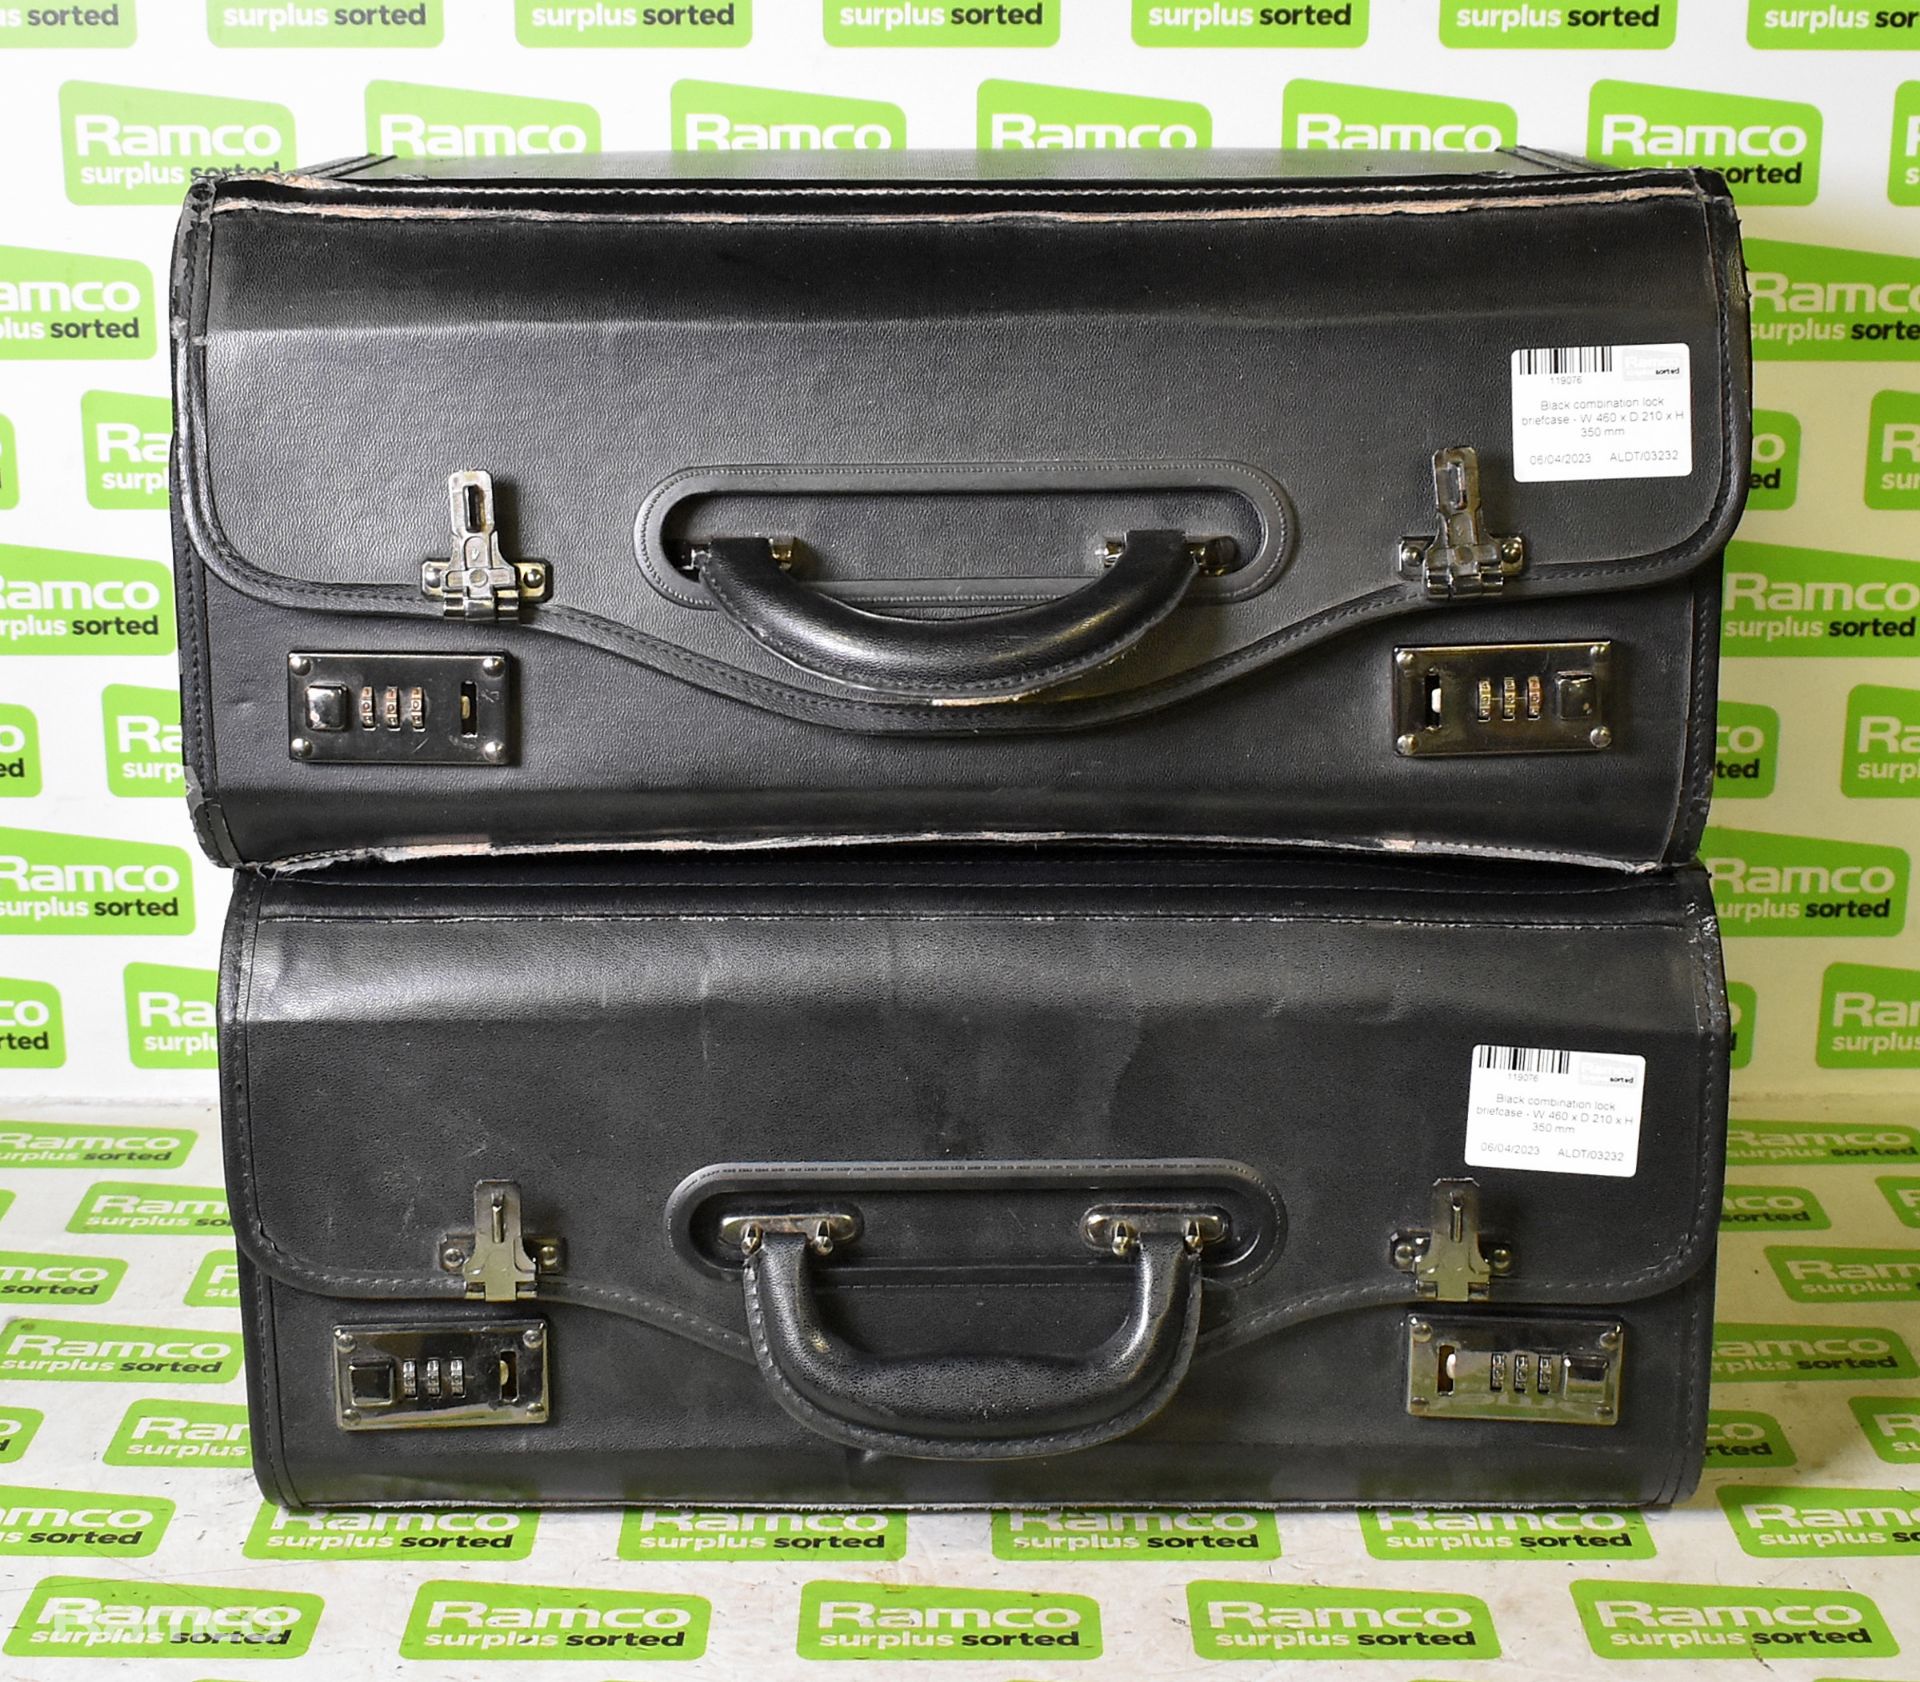 2x Black combination lock briefcases - W 460 x D 210 x H 350 mm